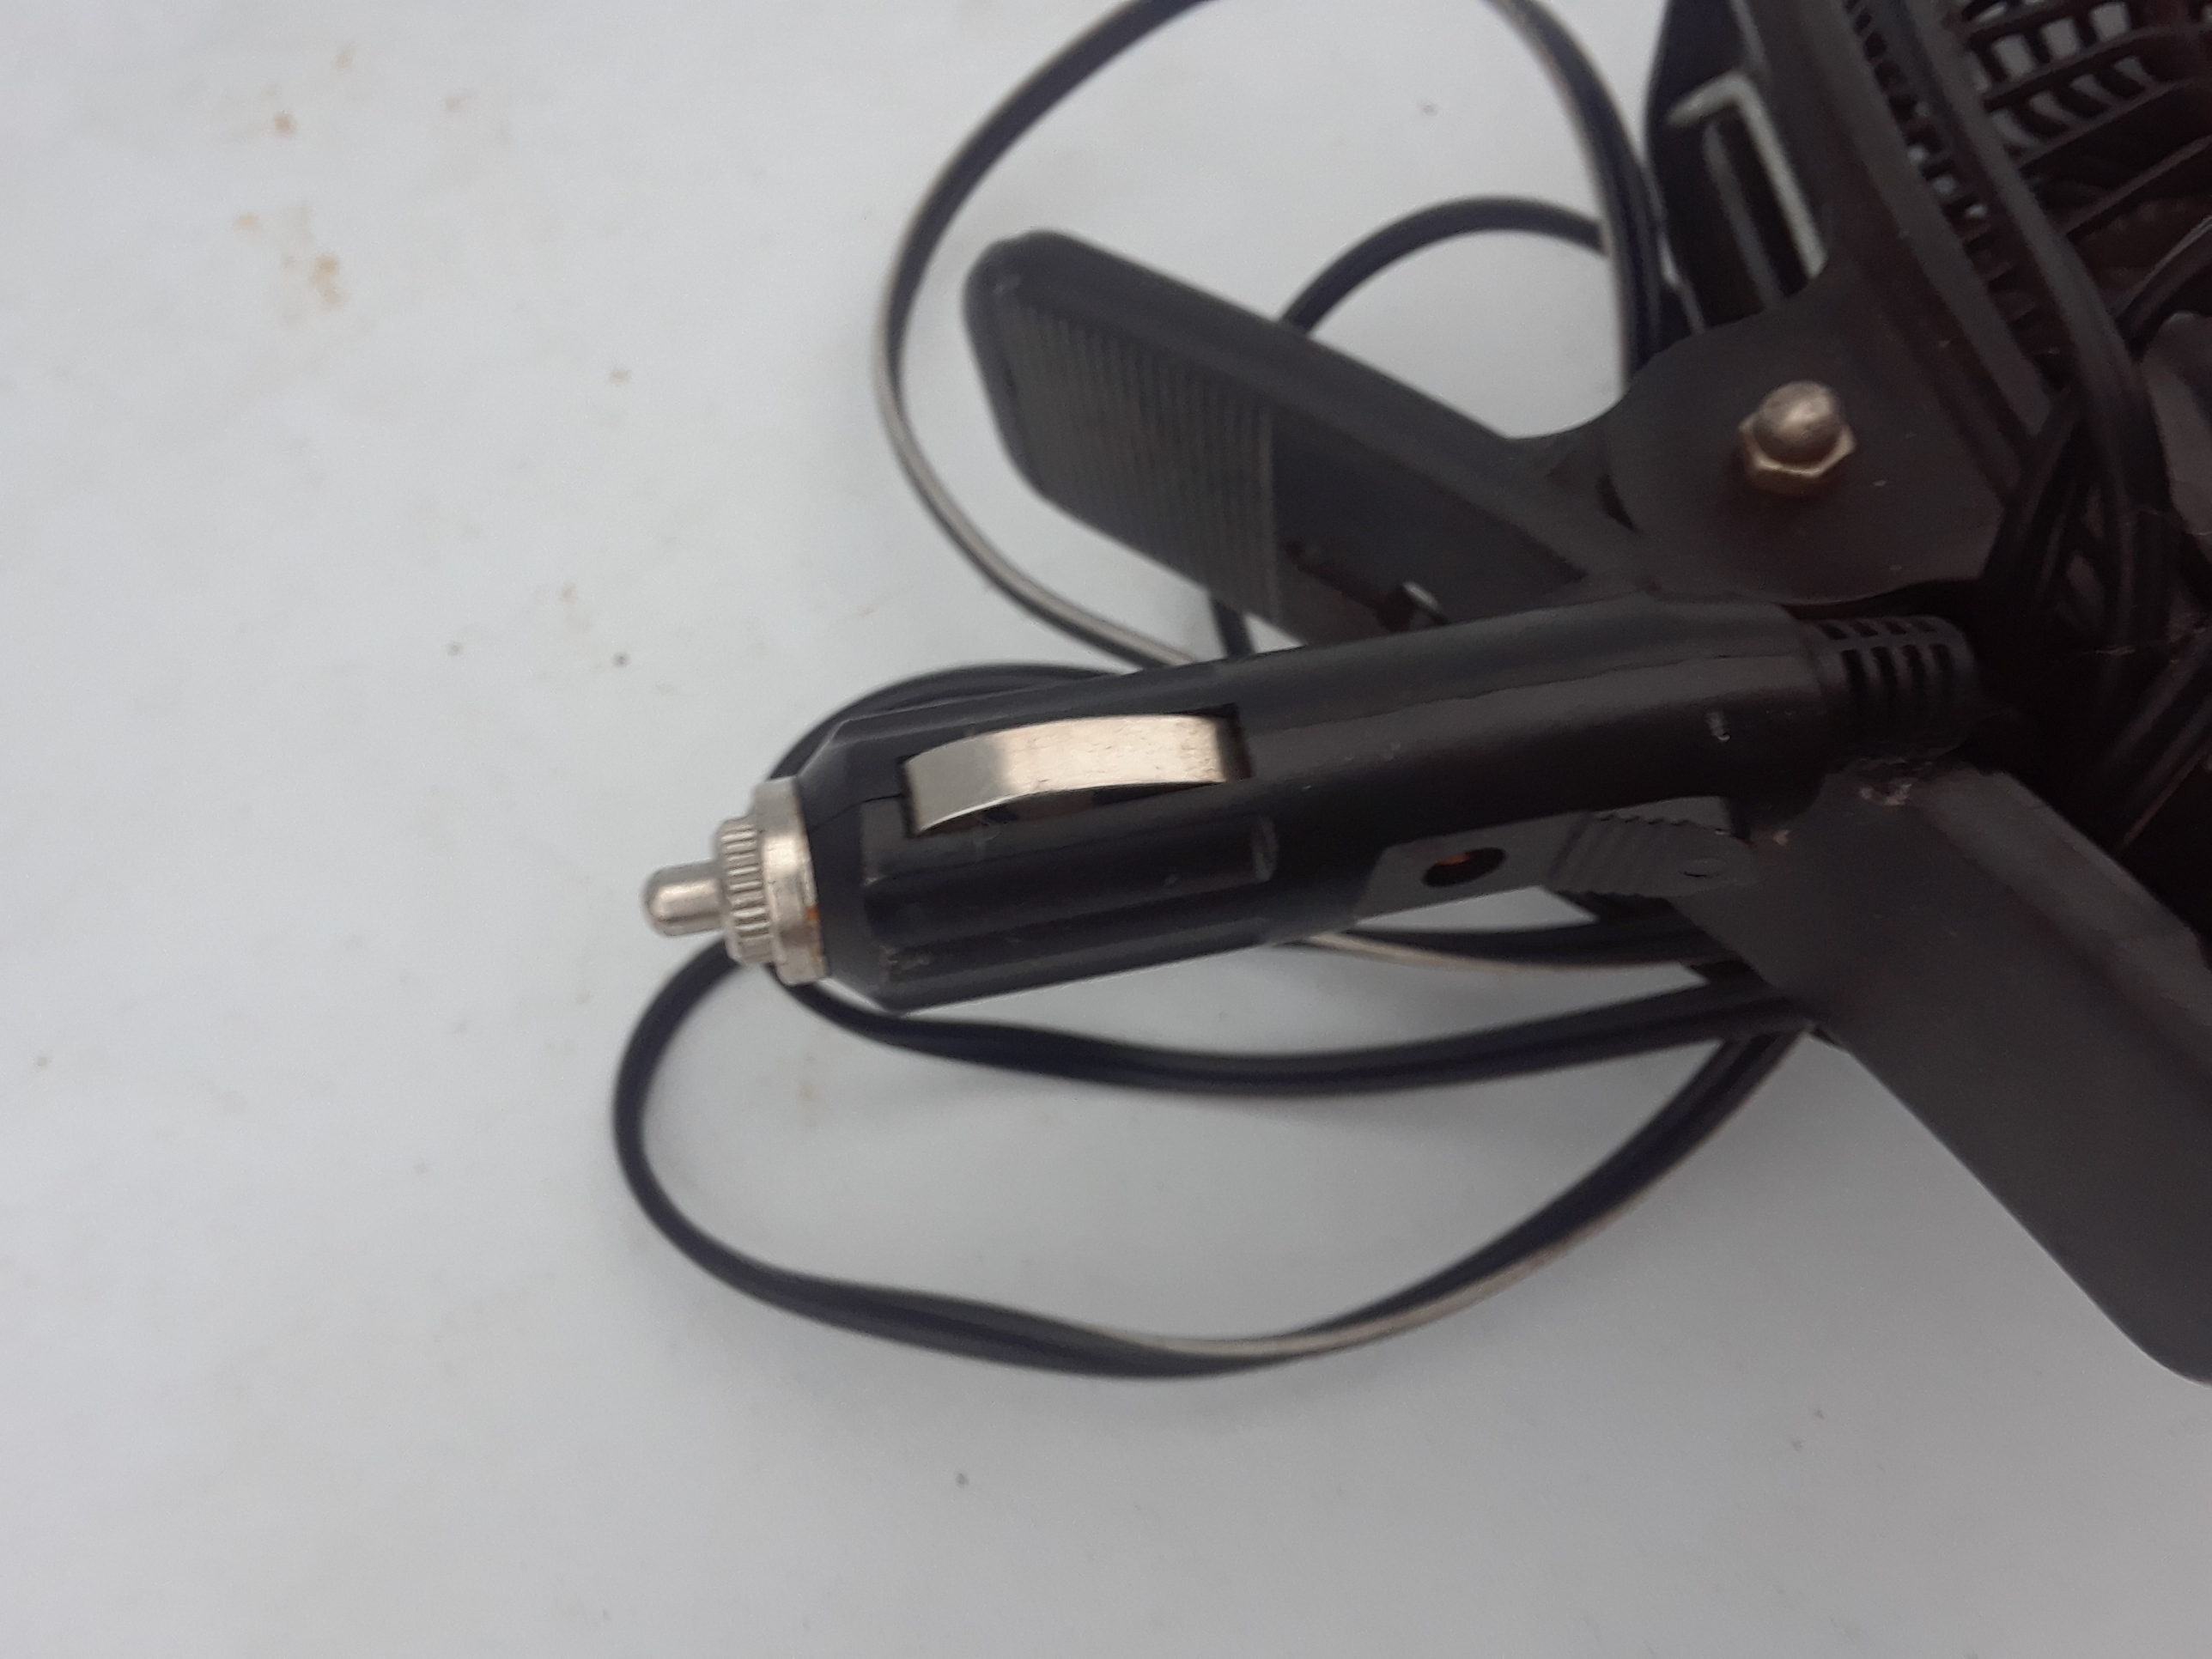 Clip On Car Fan with Cigarette Lighter Plug